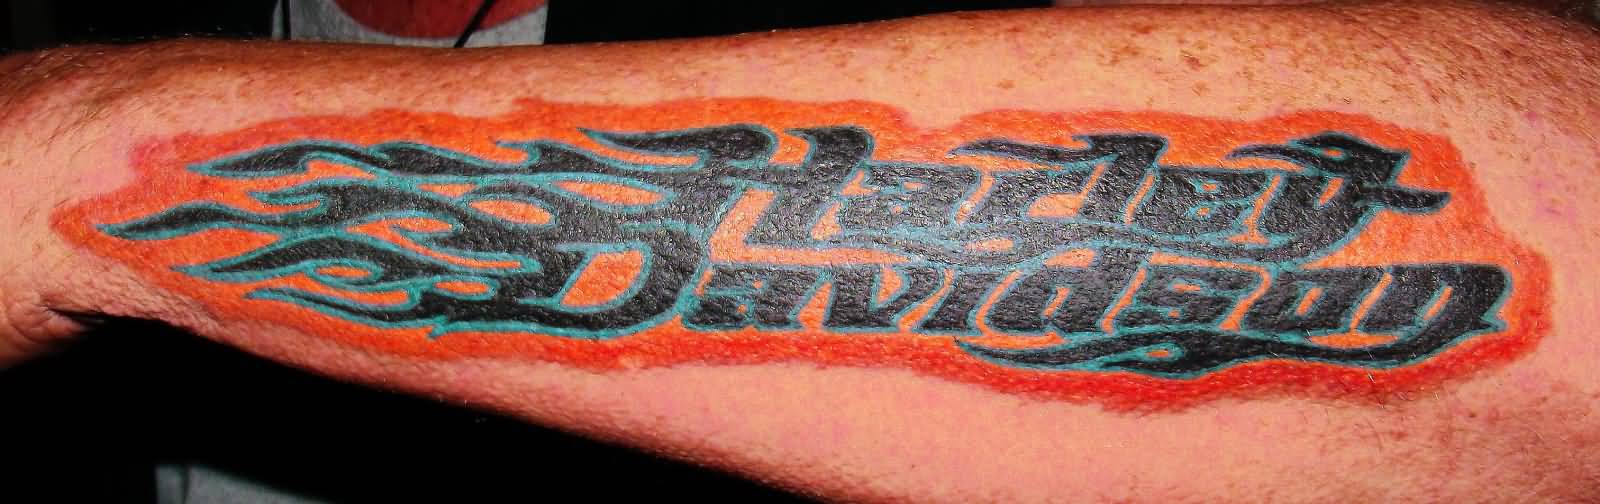 Amazing Harley Davidson Words Tattoo On Forearm